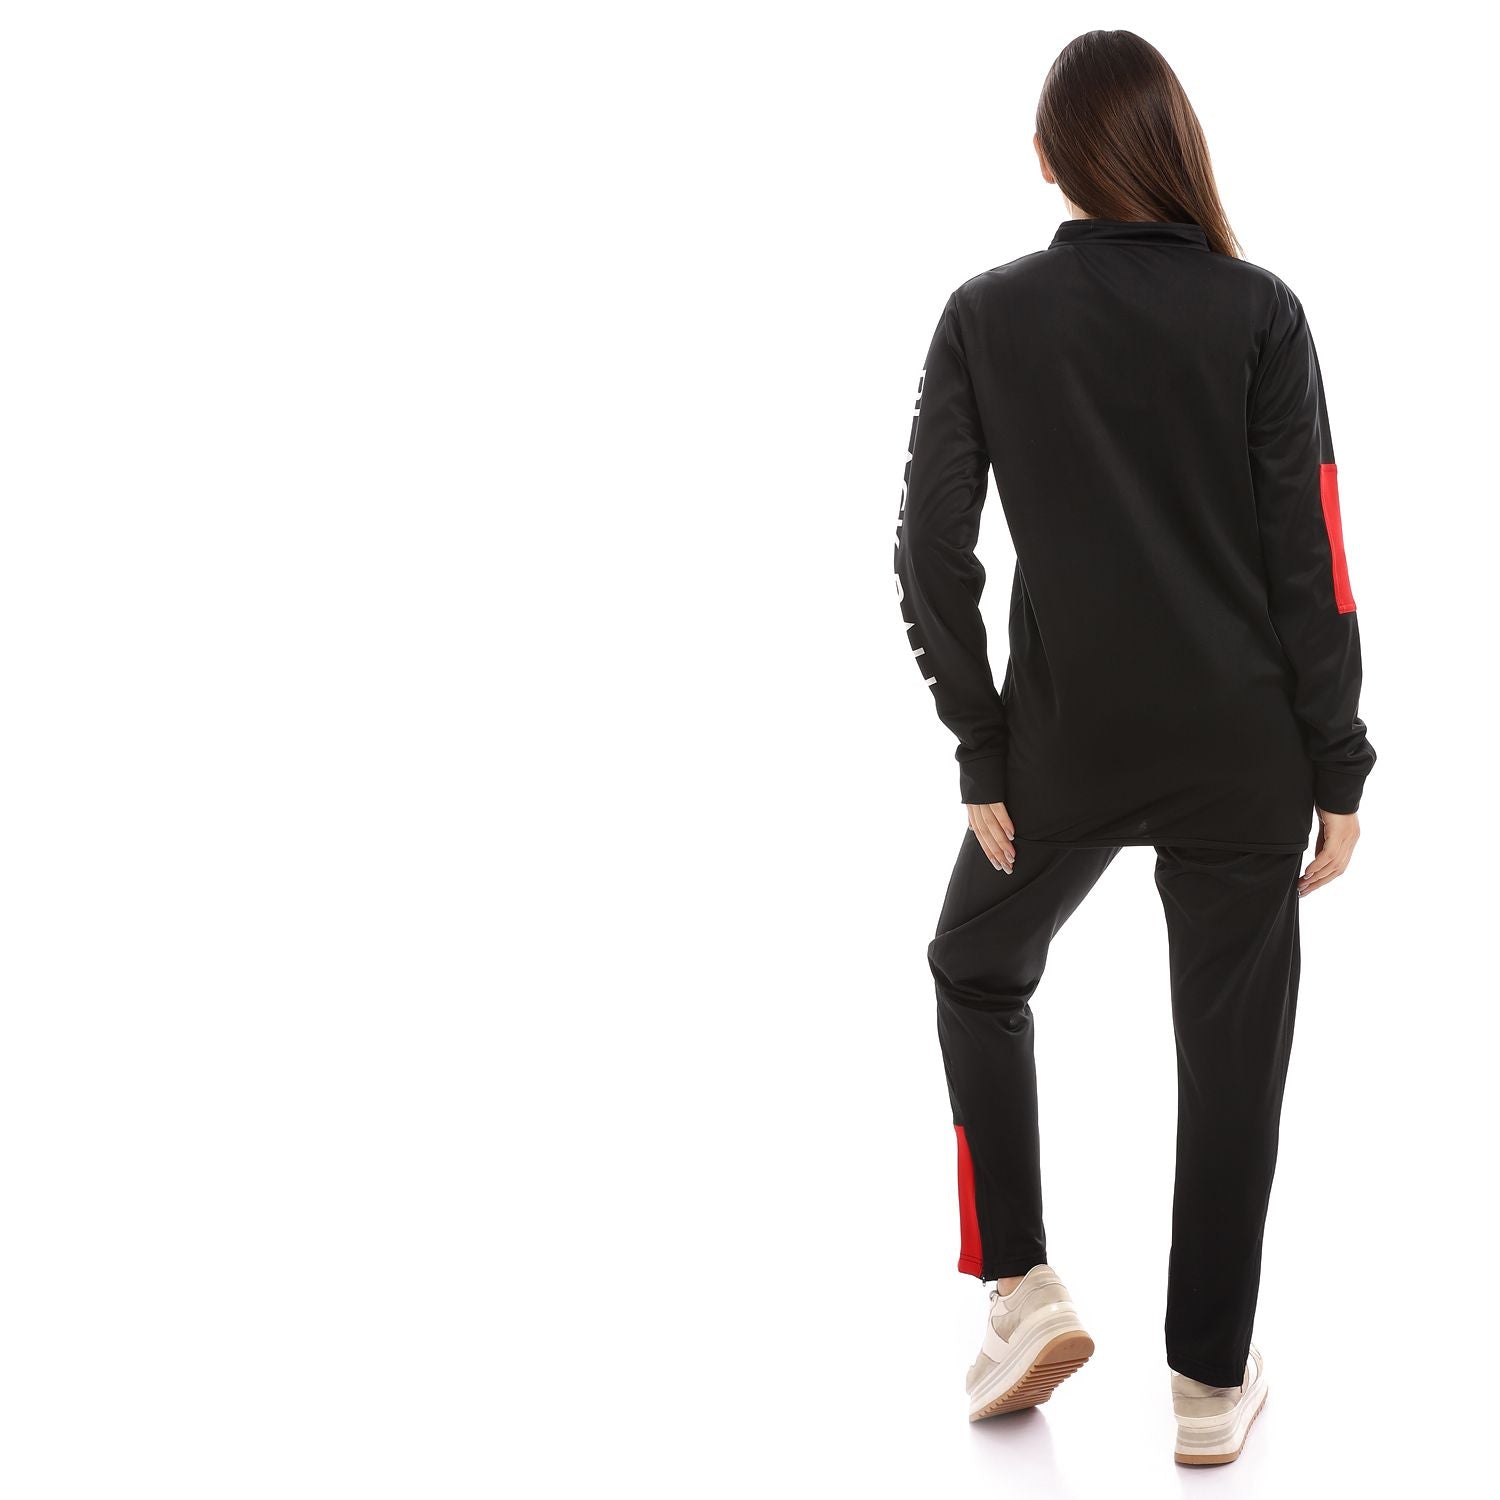 Black ball "Unisex" Active Training Set Of Pant And Jacket-Black*Red - Champsland